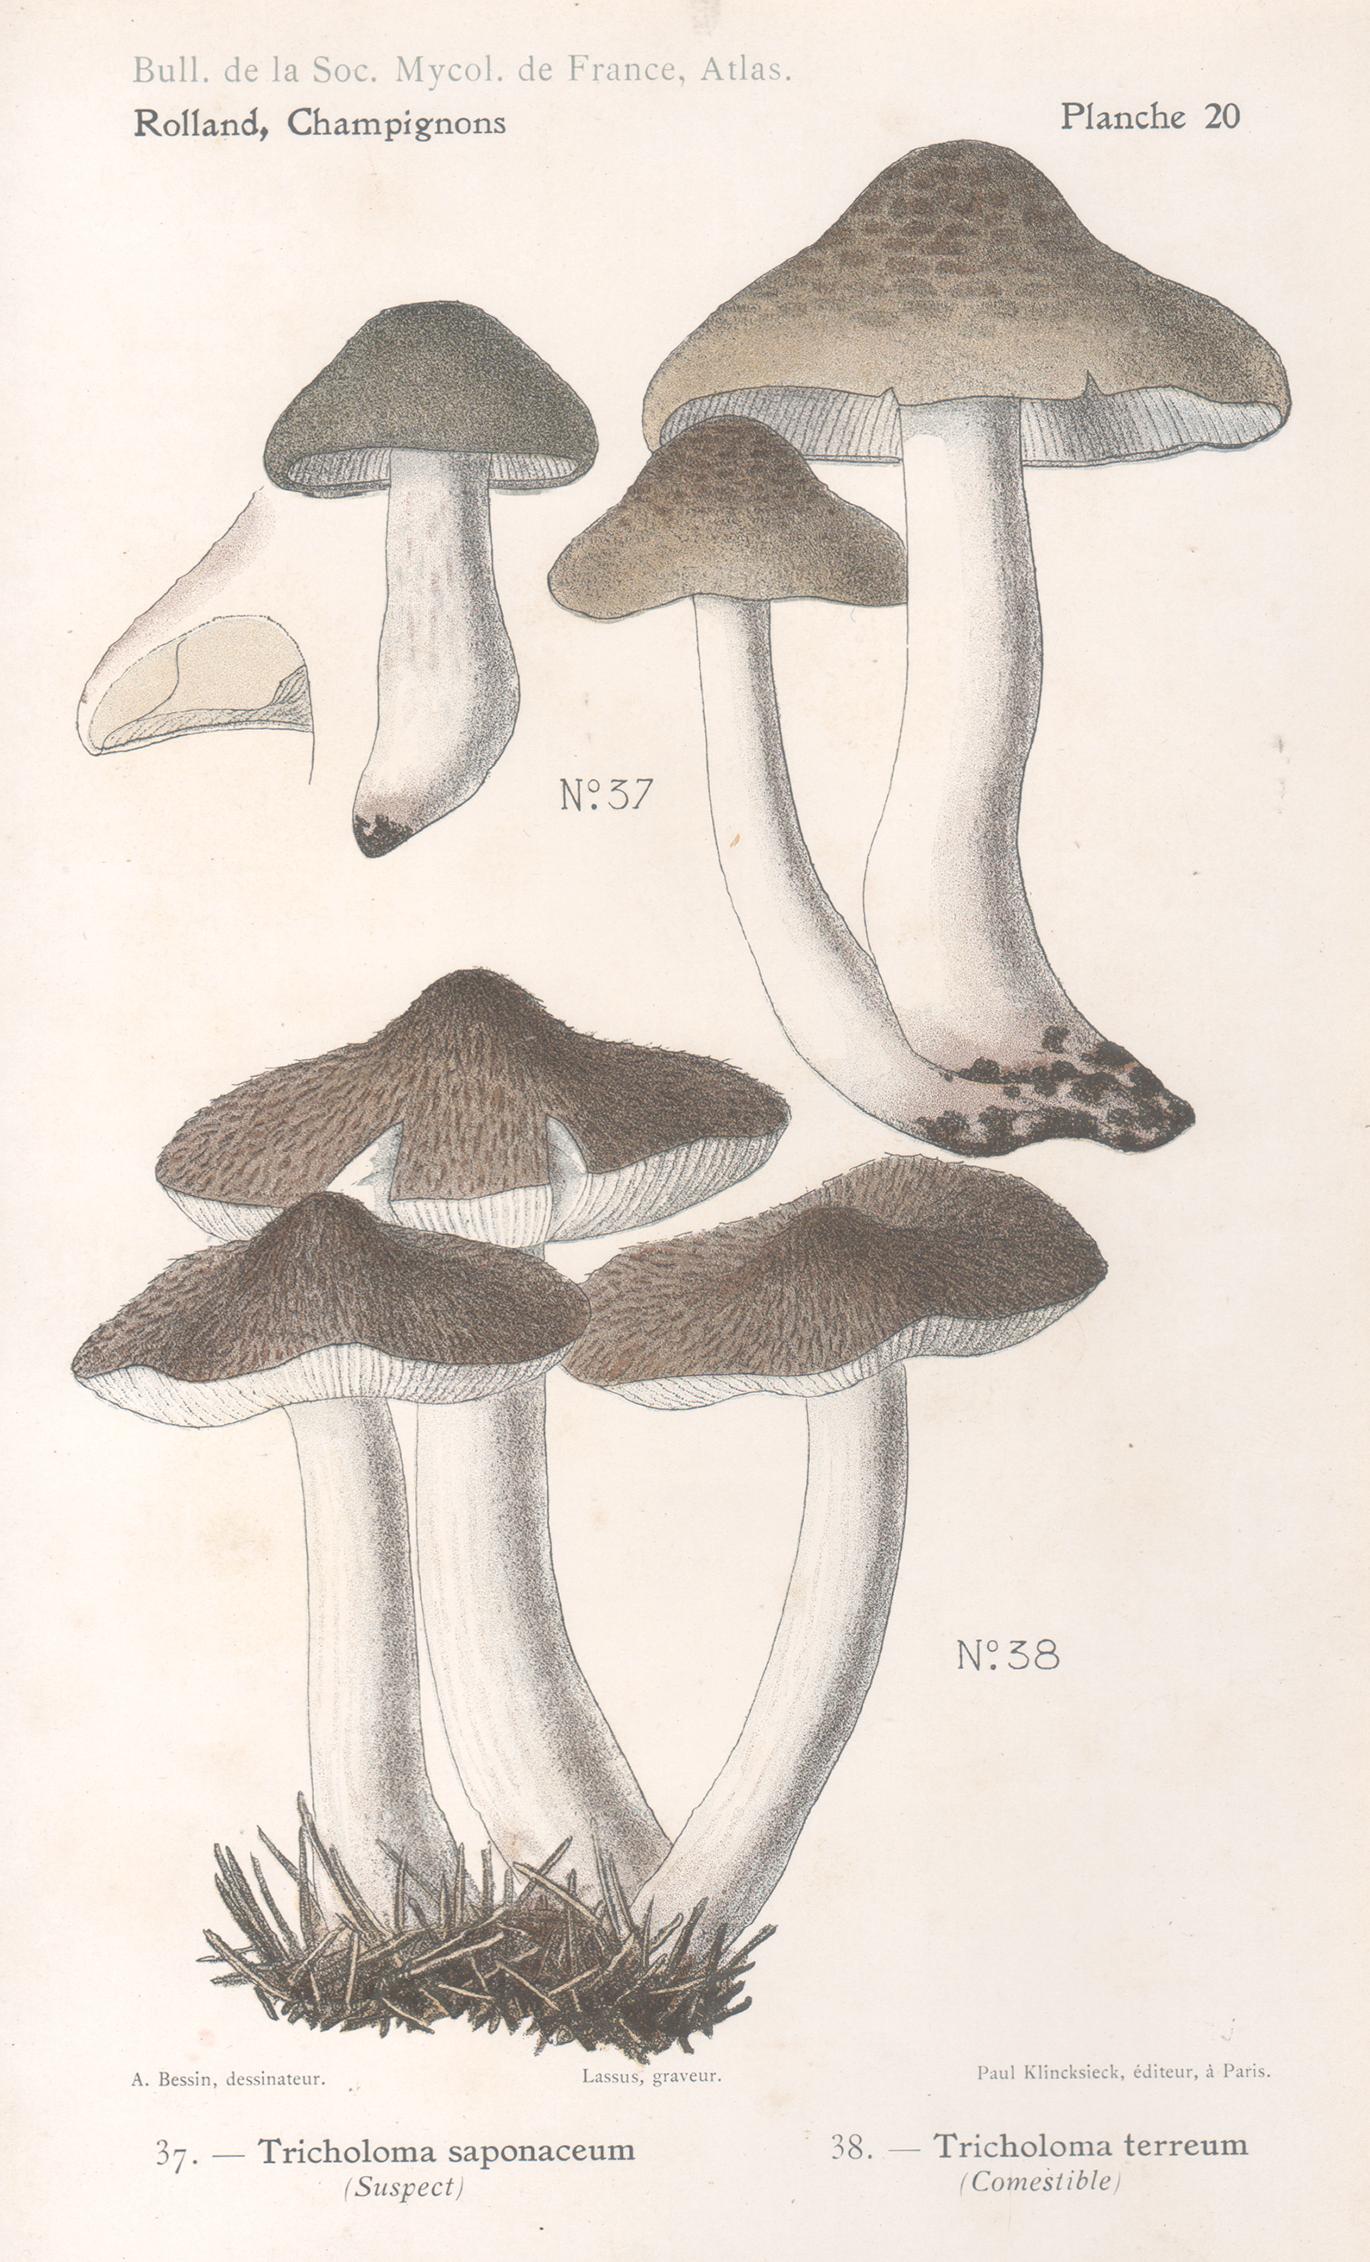 Lassus after Aimé Bessin Still-Life Print - Champignons, French antique mushroom chromolithograph, 1910